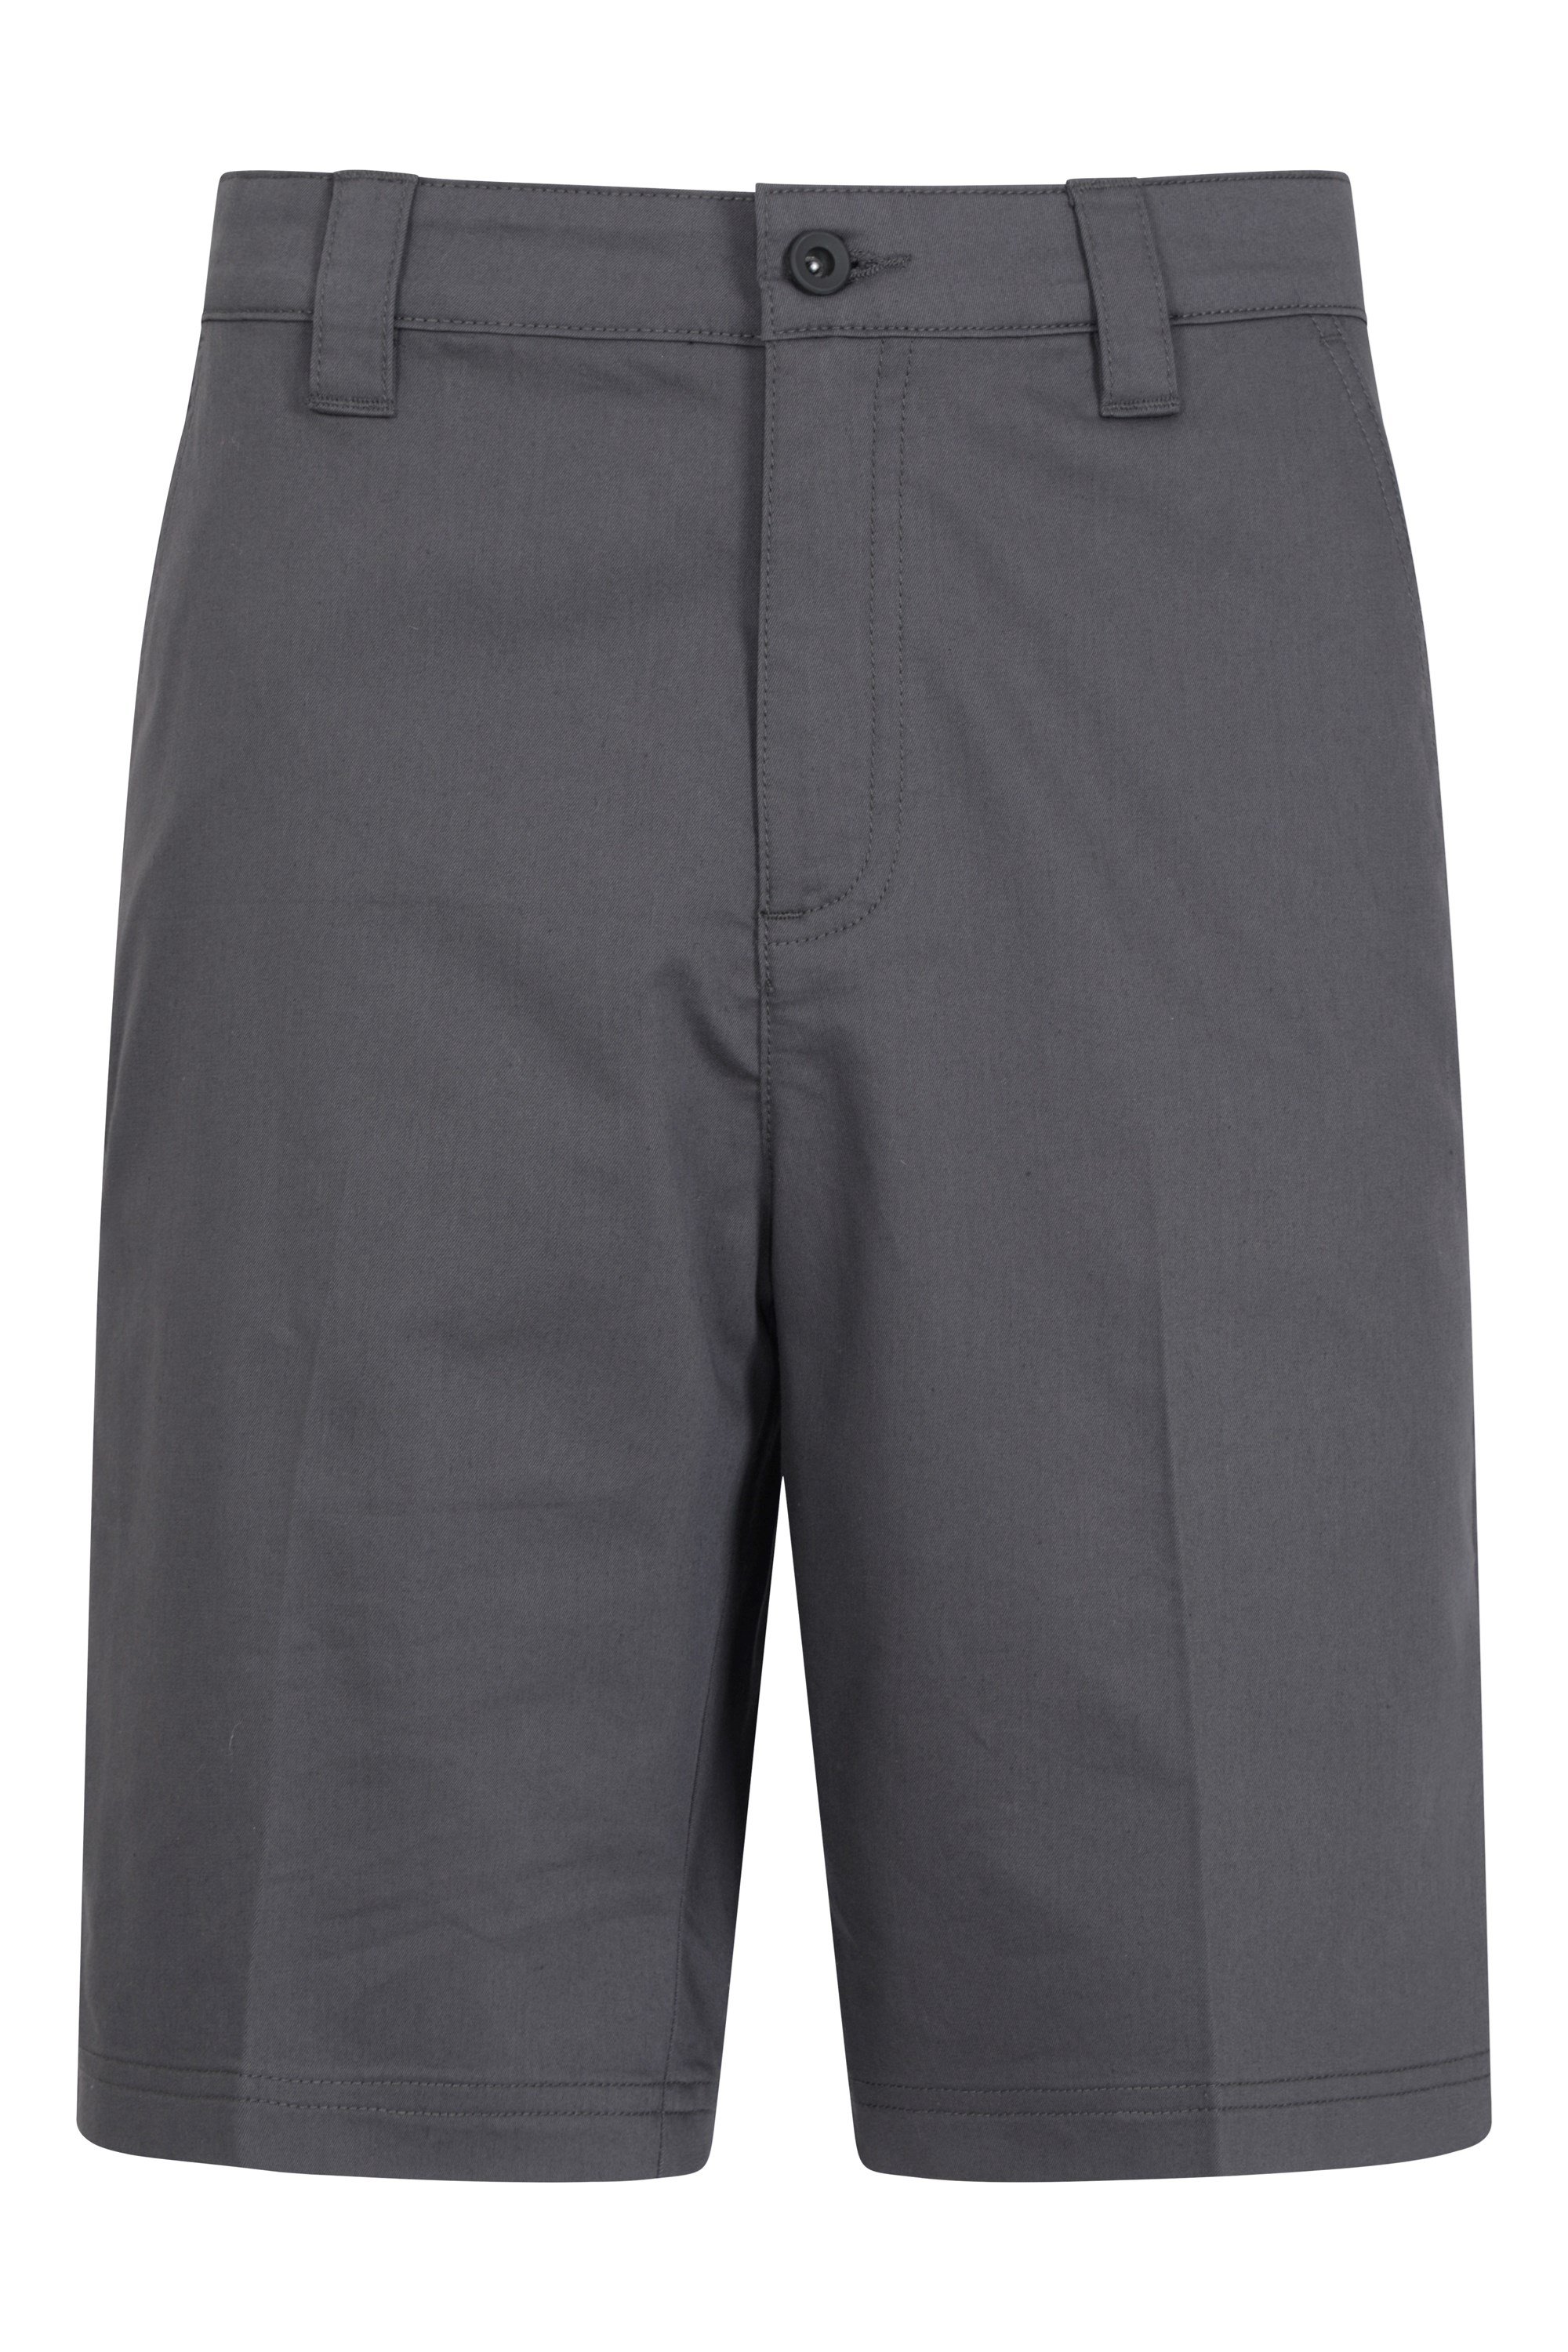 Men's Sweat Wicking Golf Shorts